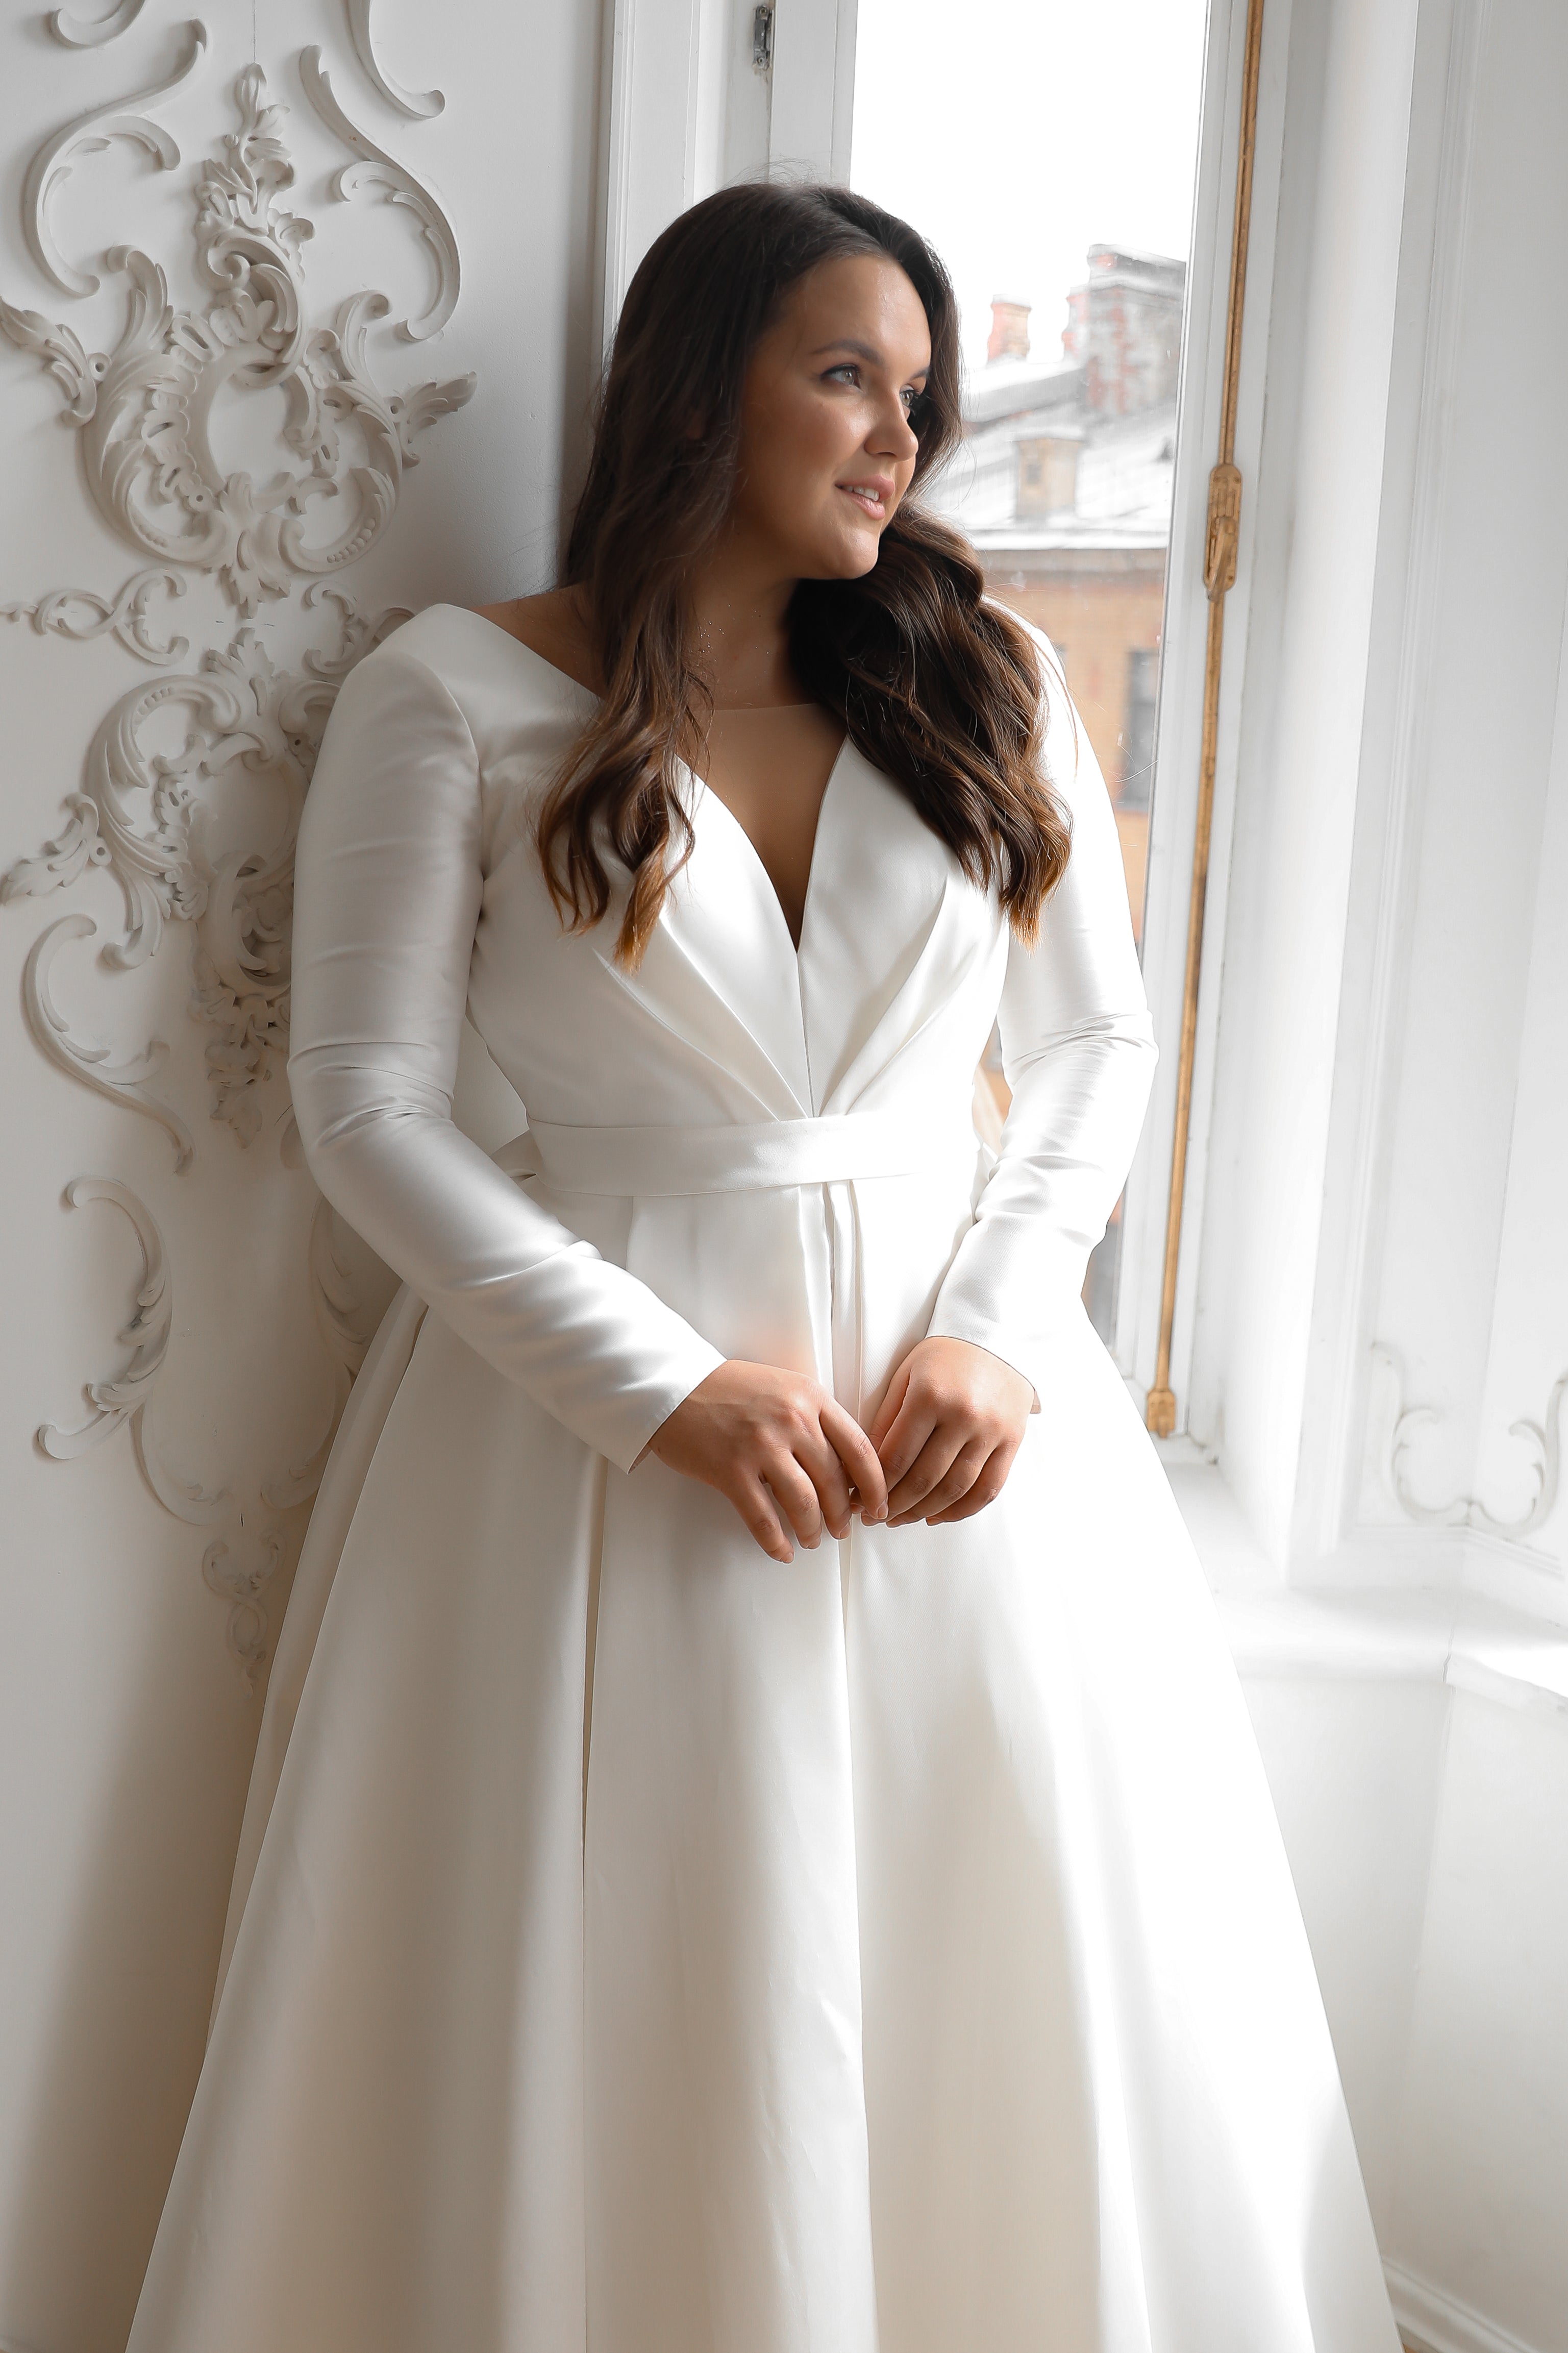 Top Seven Wedding Dresses with Slits - Pretty Happy Love - Wedding Blog